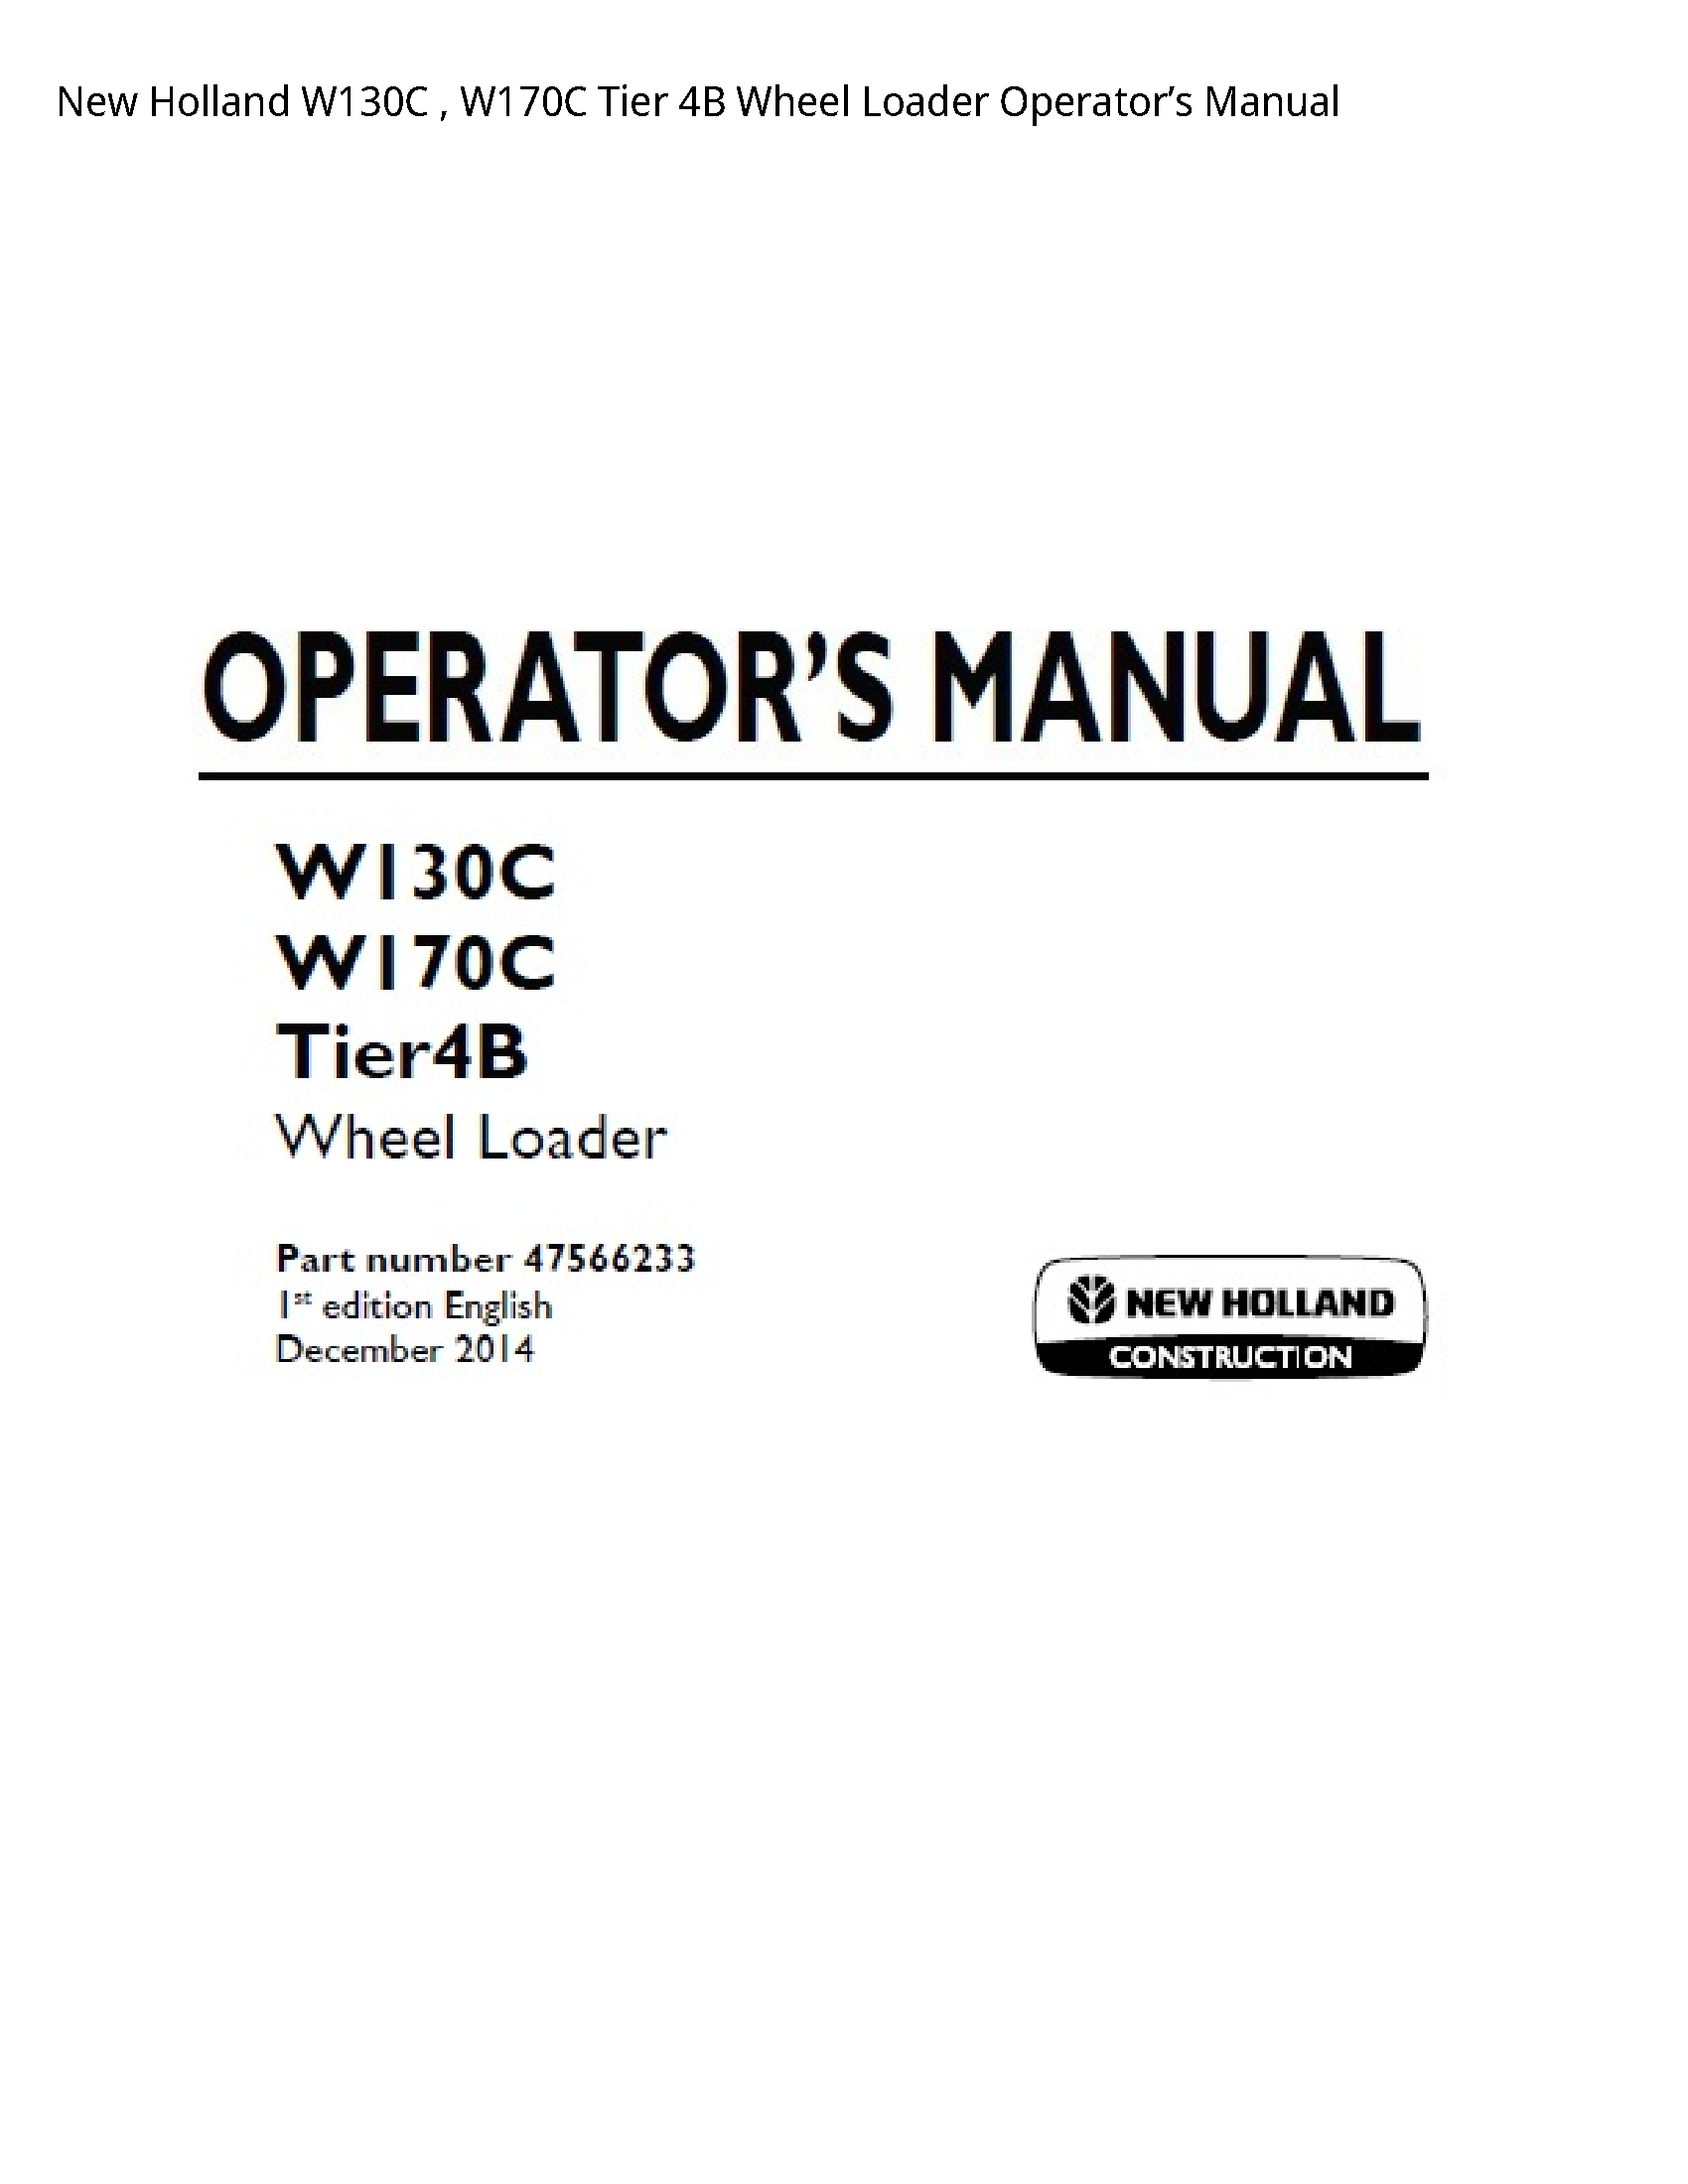 New Holland W130C Tier Wheel Loader Operator’s manual